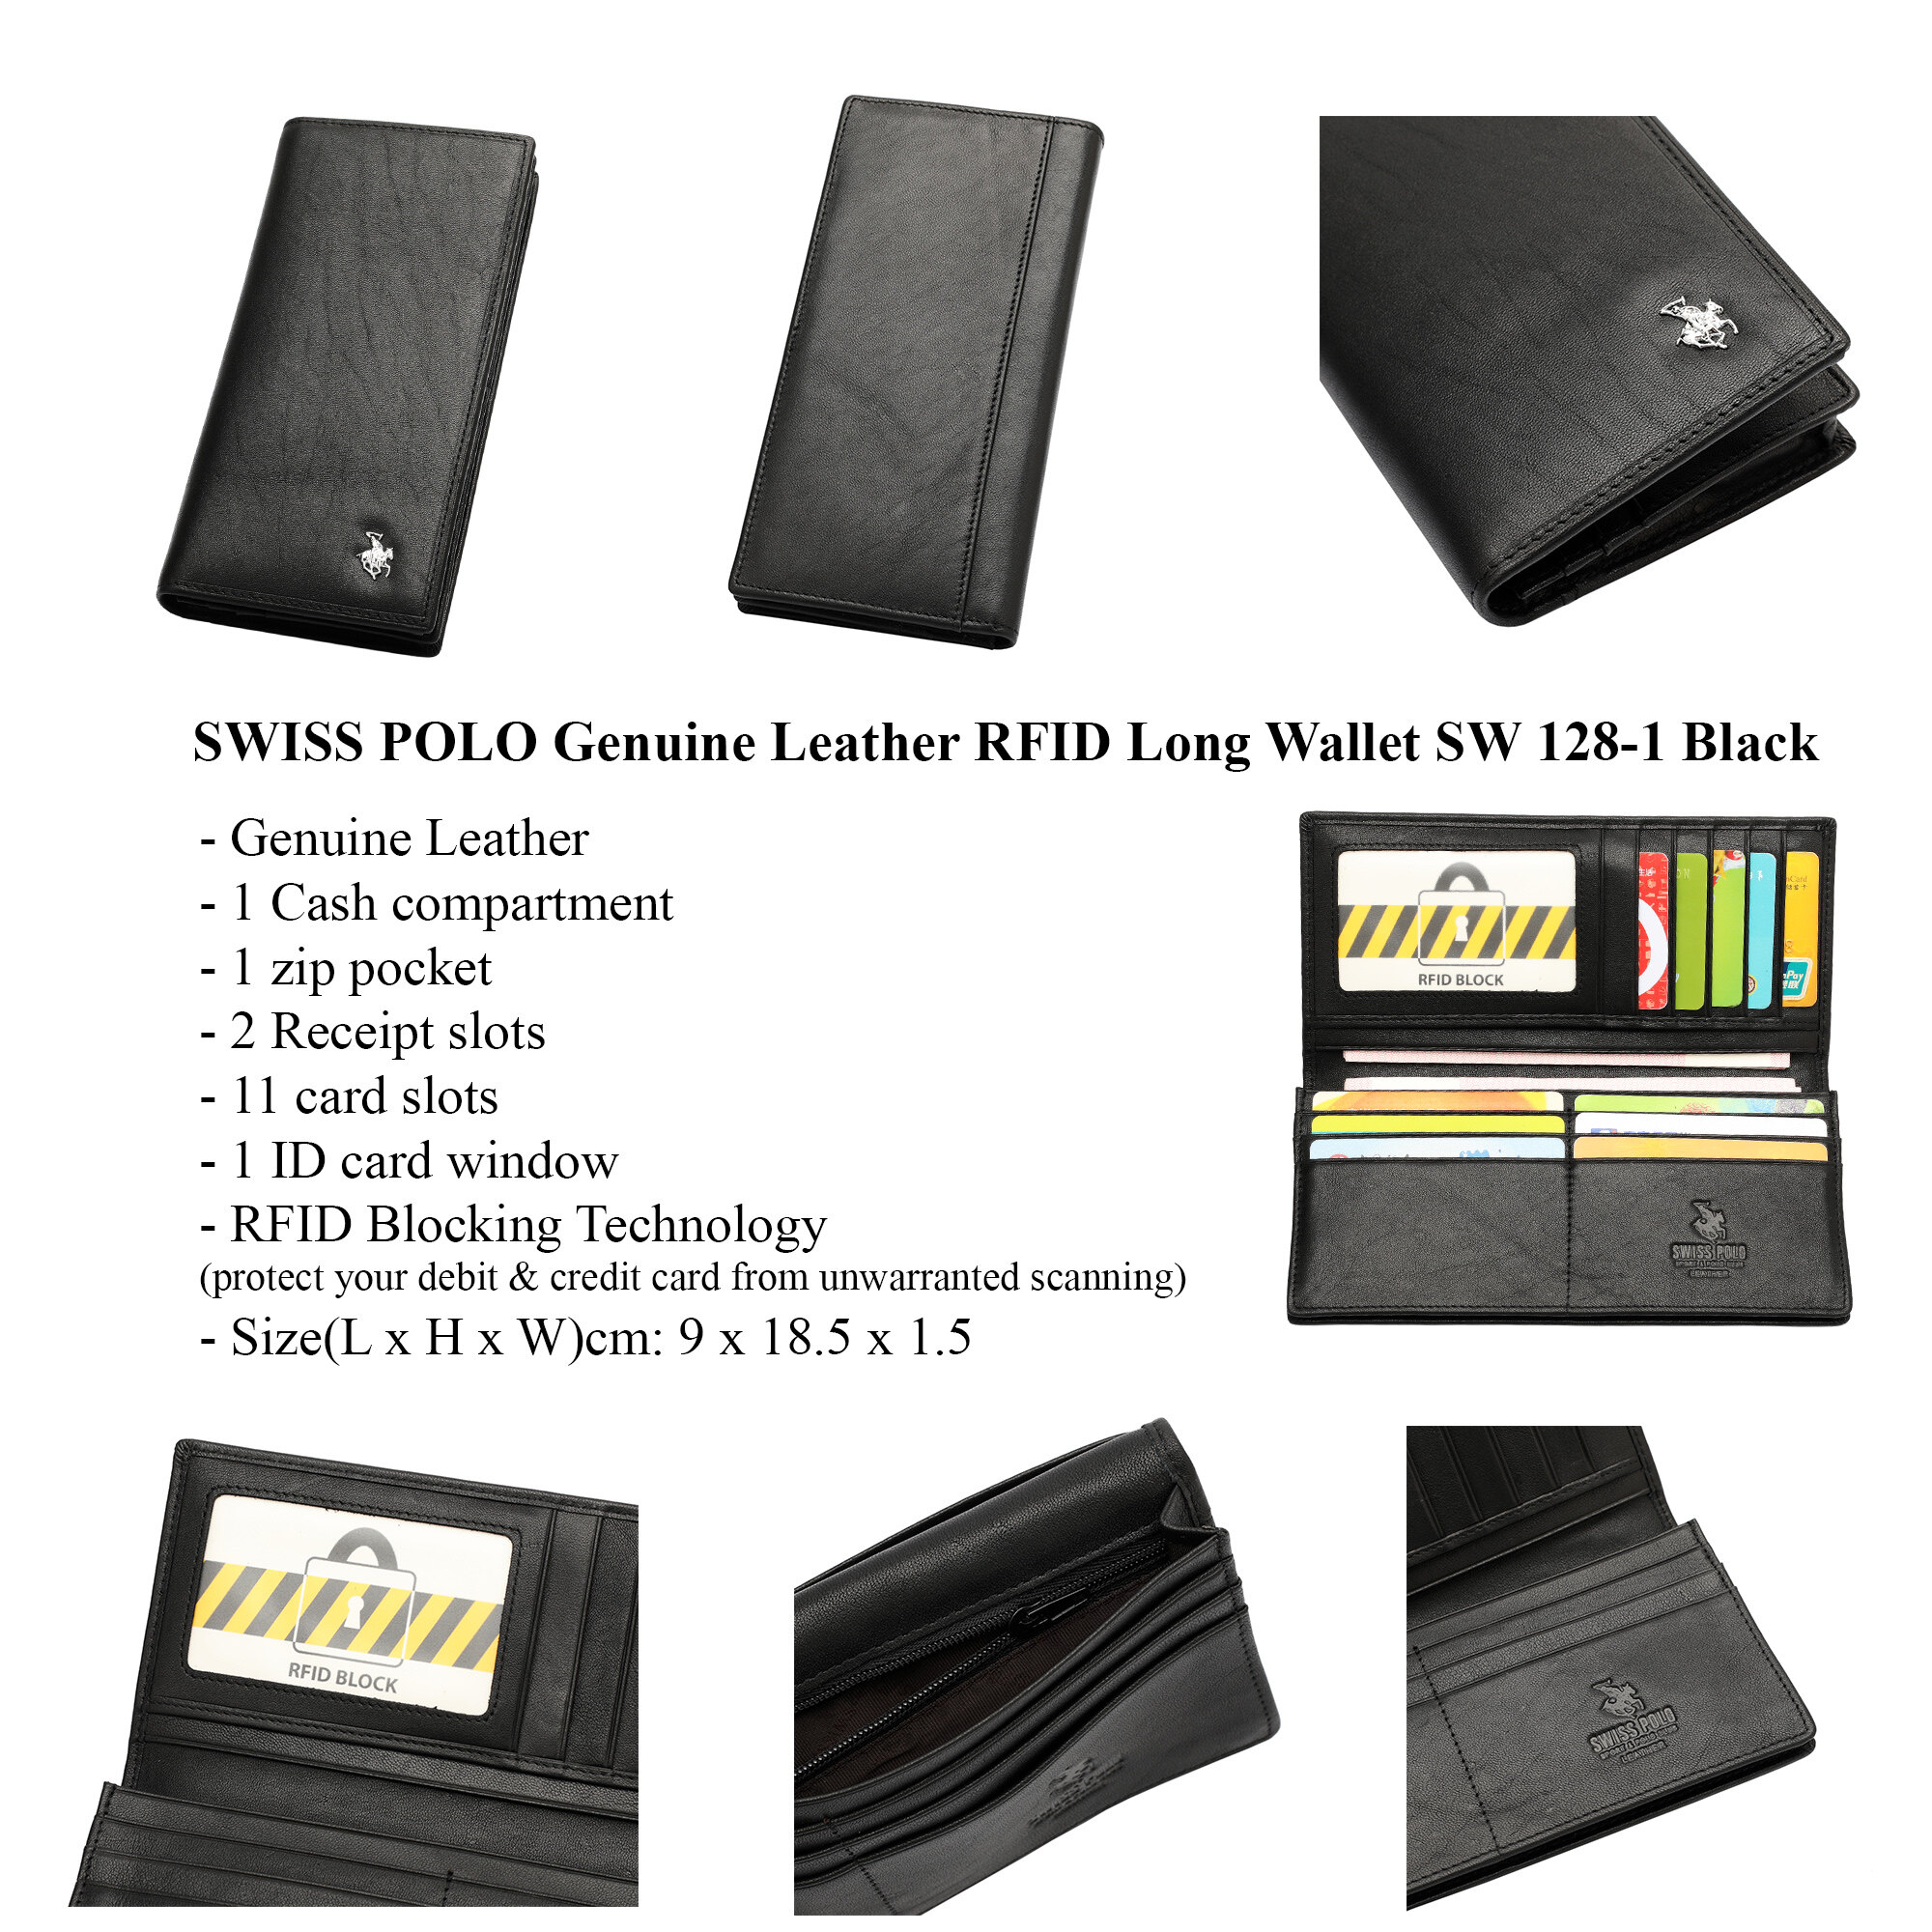 SWISS POLO Genuine Leather RFID Long Wallet SW 128-1 BLACK